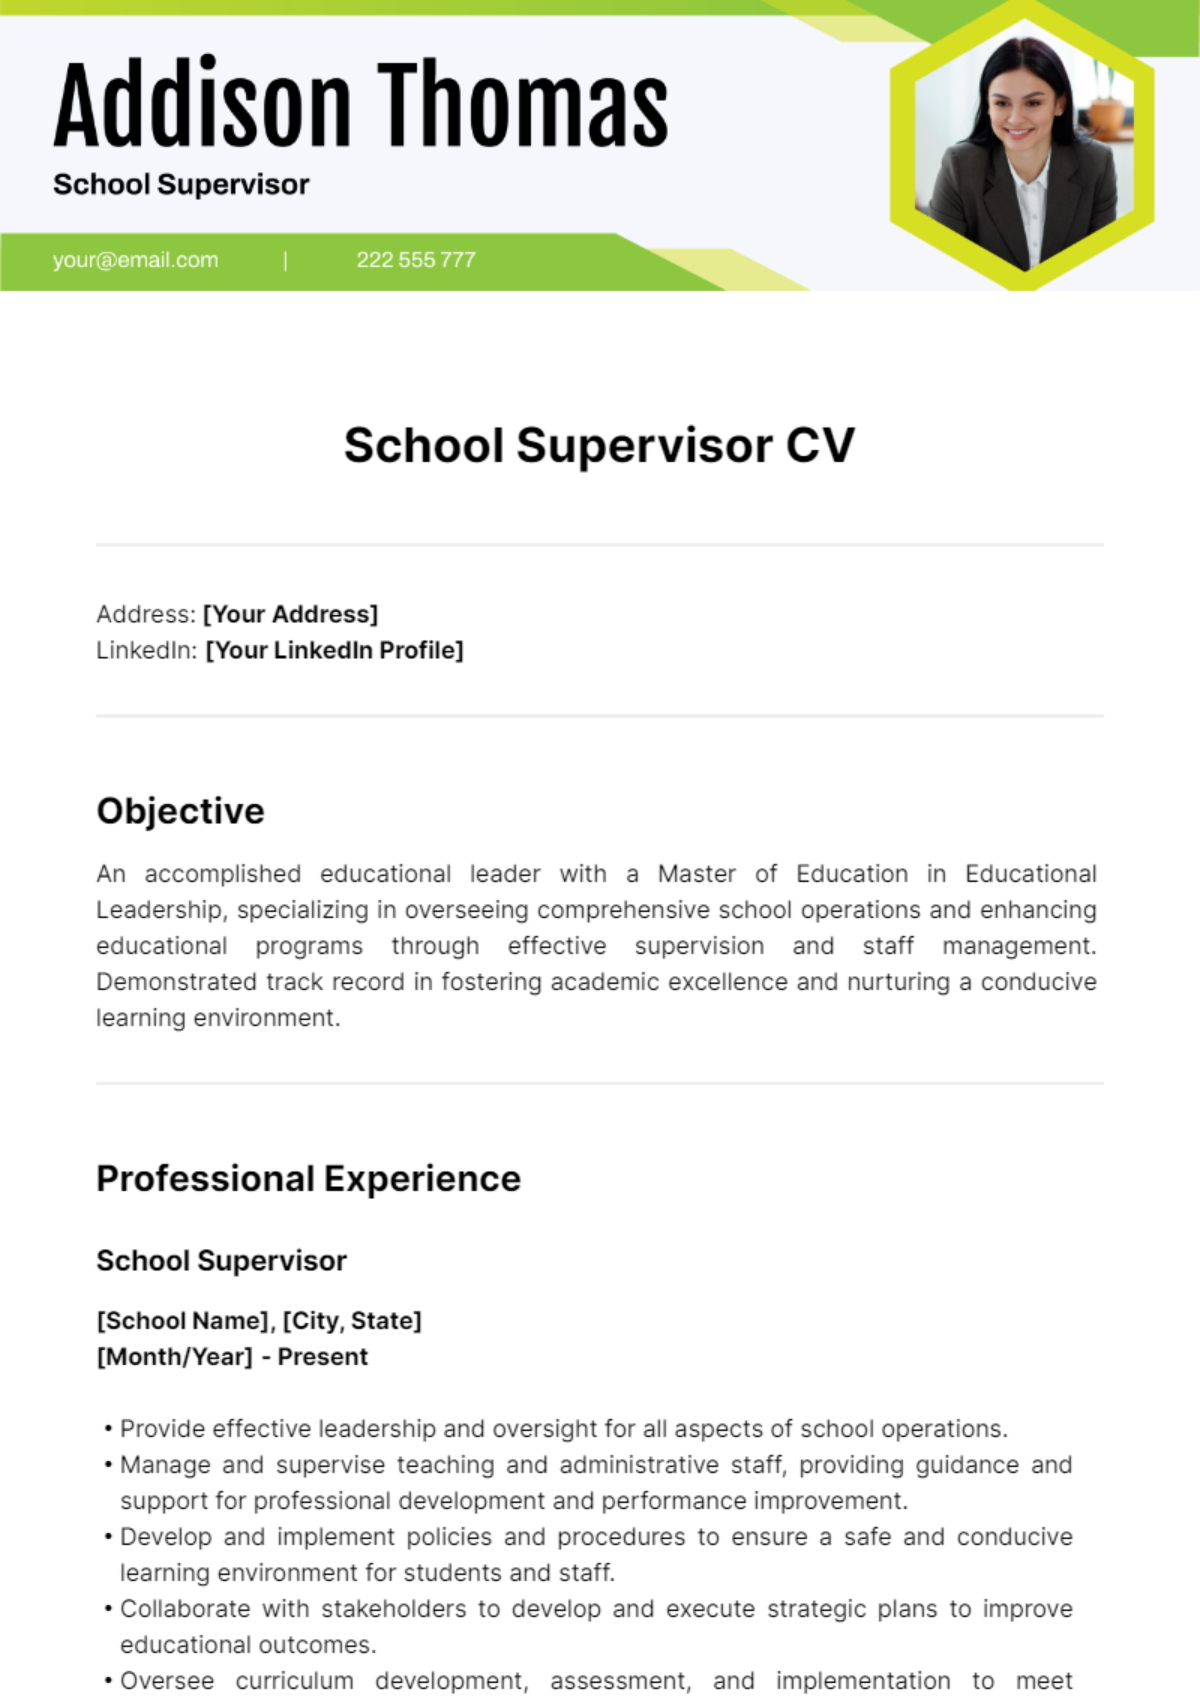 School Supervisor CV Template